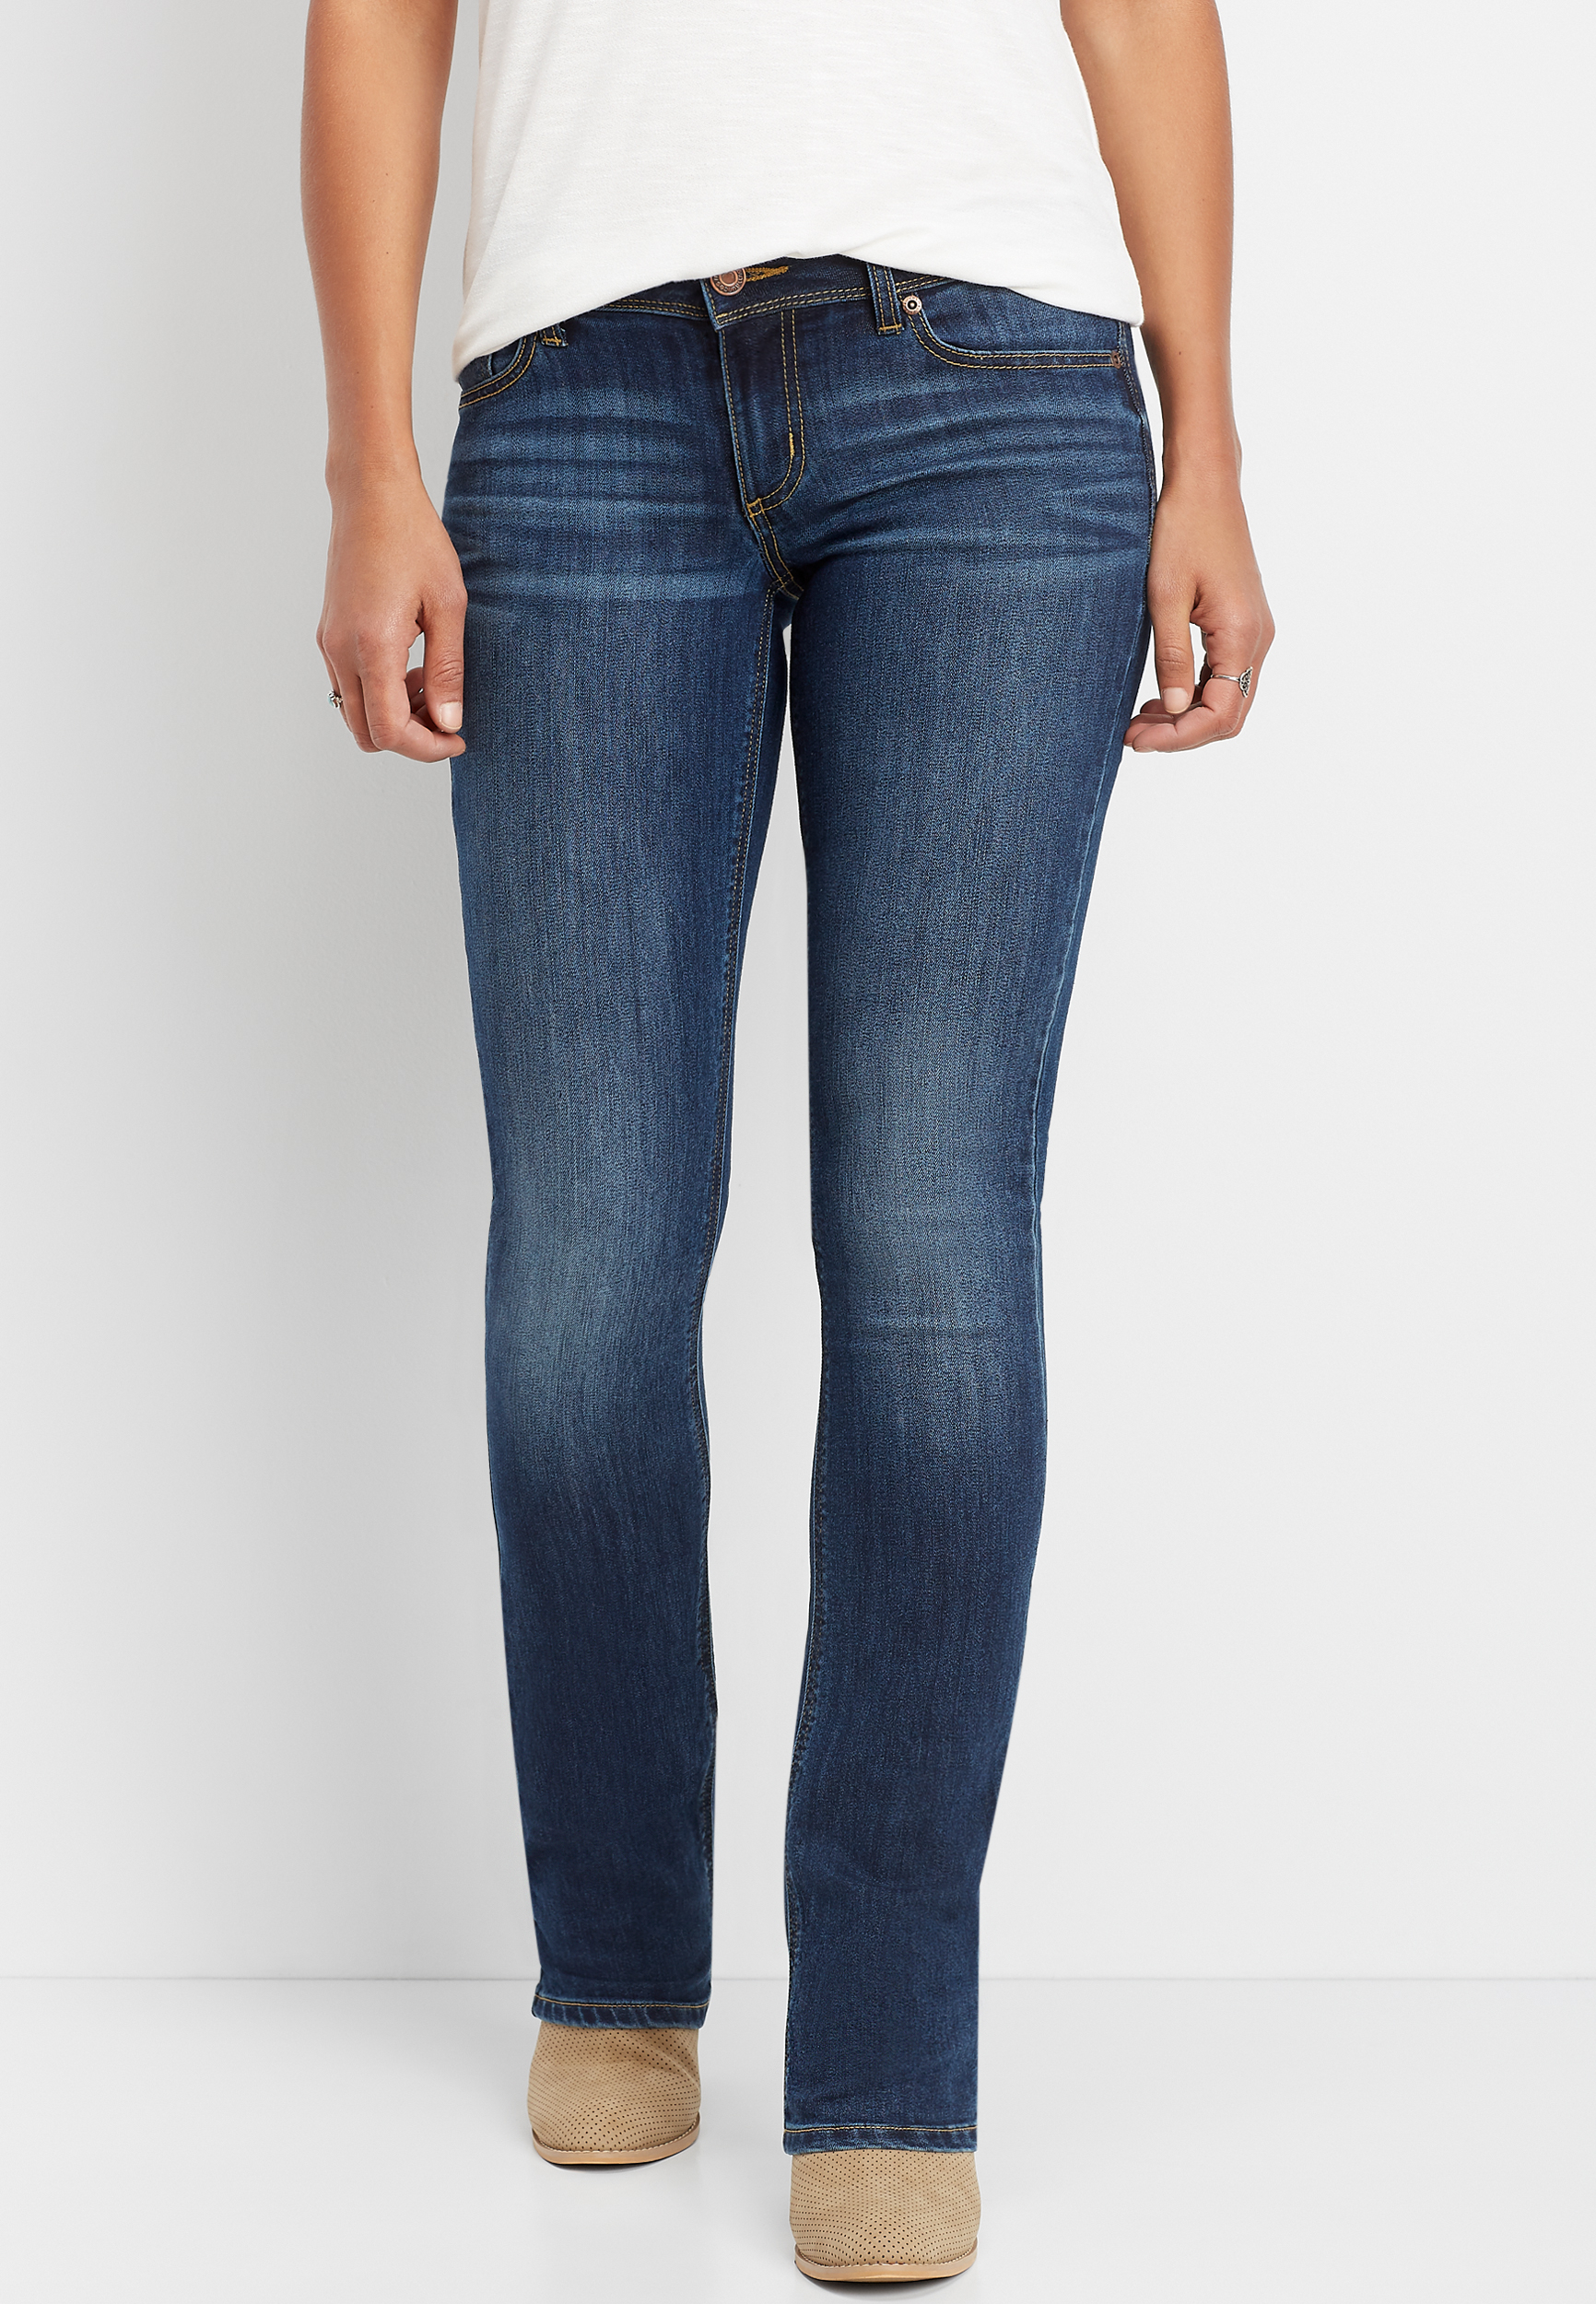 khloe kardashian jeans price